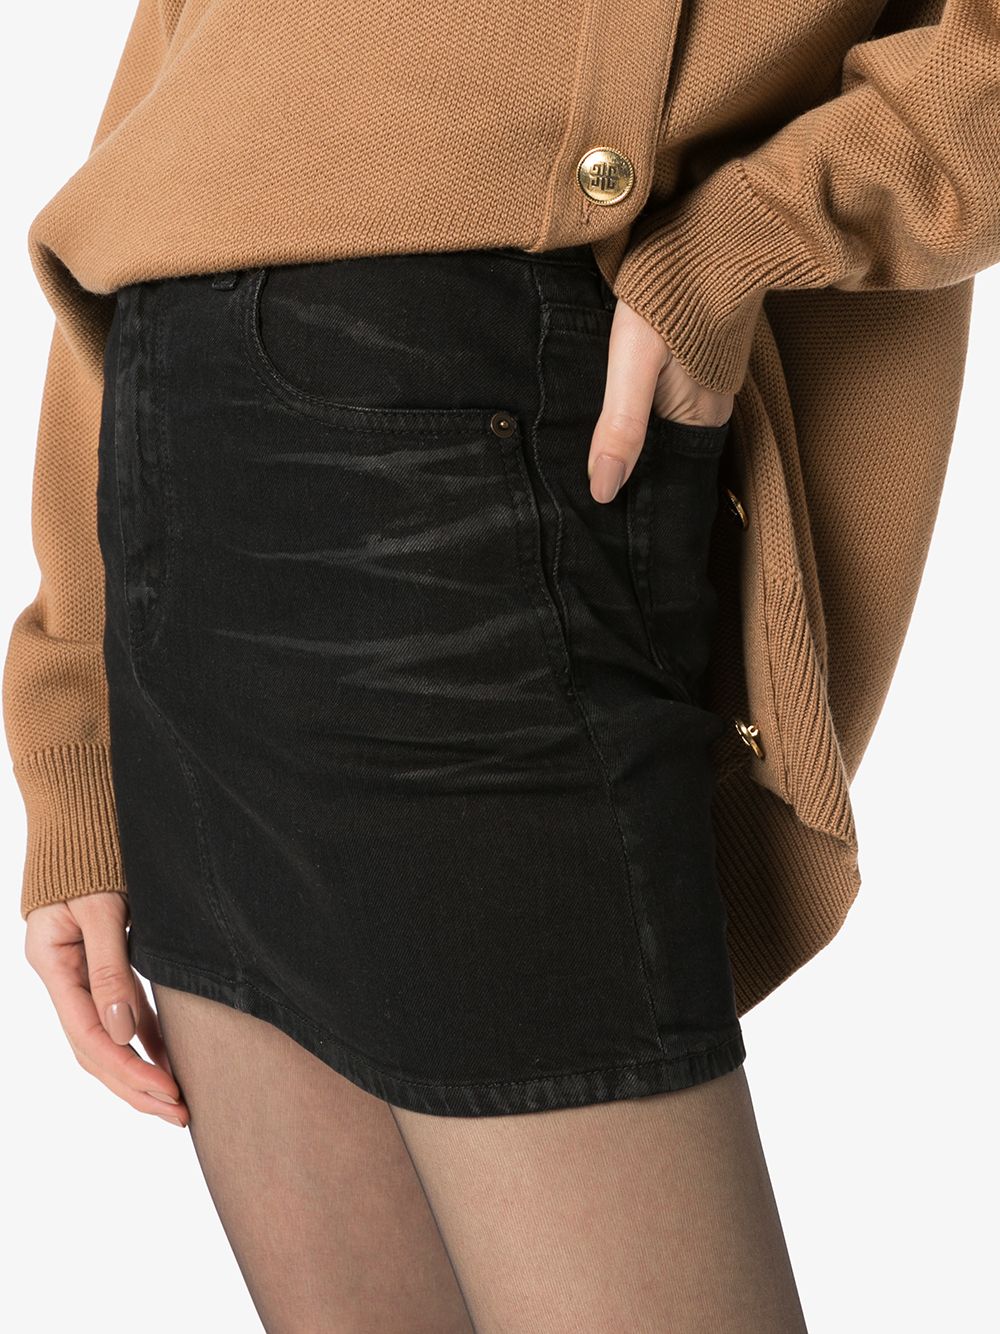 фото Saint laurent джинсовая юбка мини